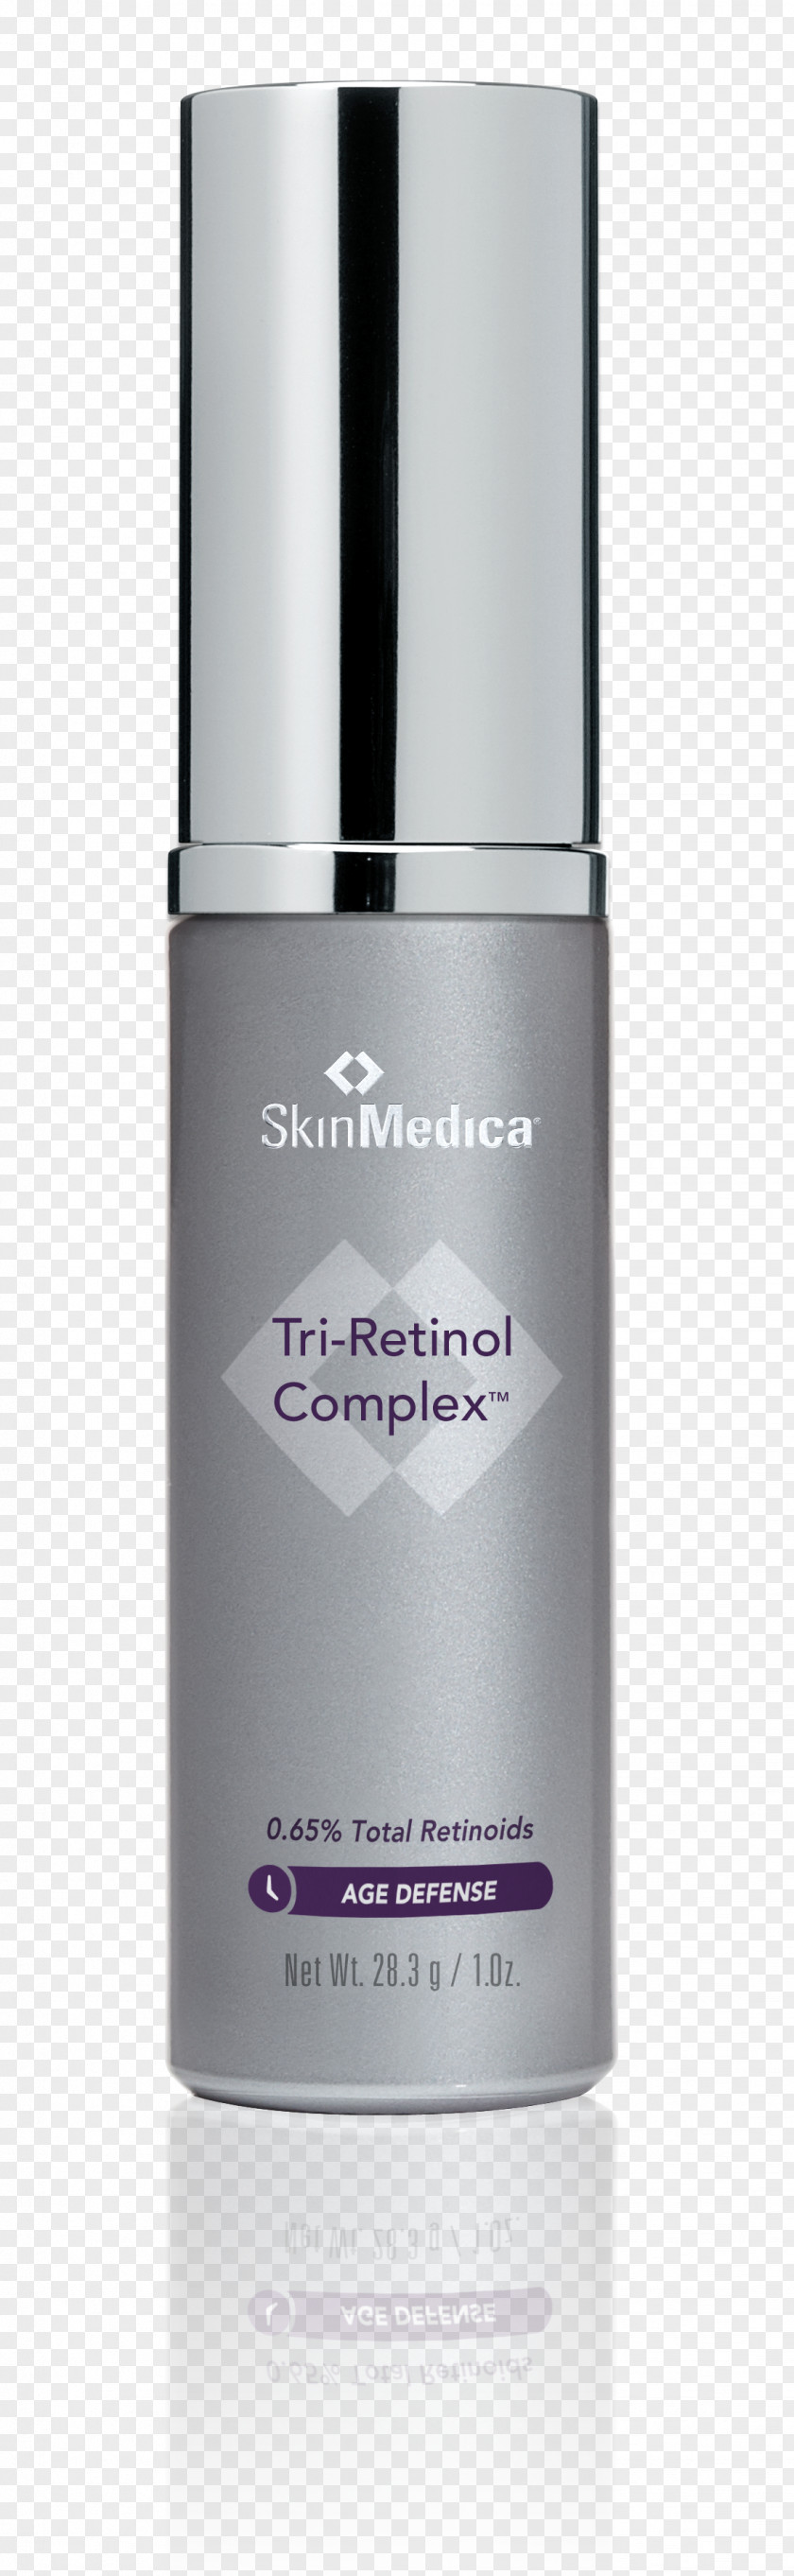 Lotion Cosmetics Sunscreen SkinMedica Skin Care PNG